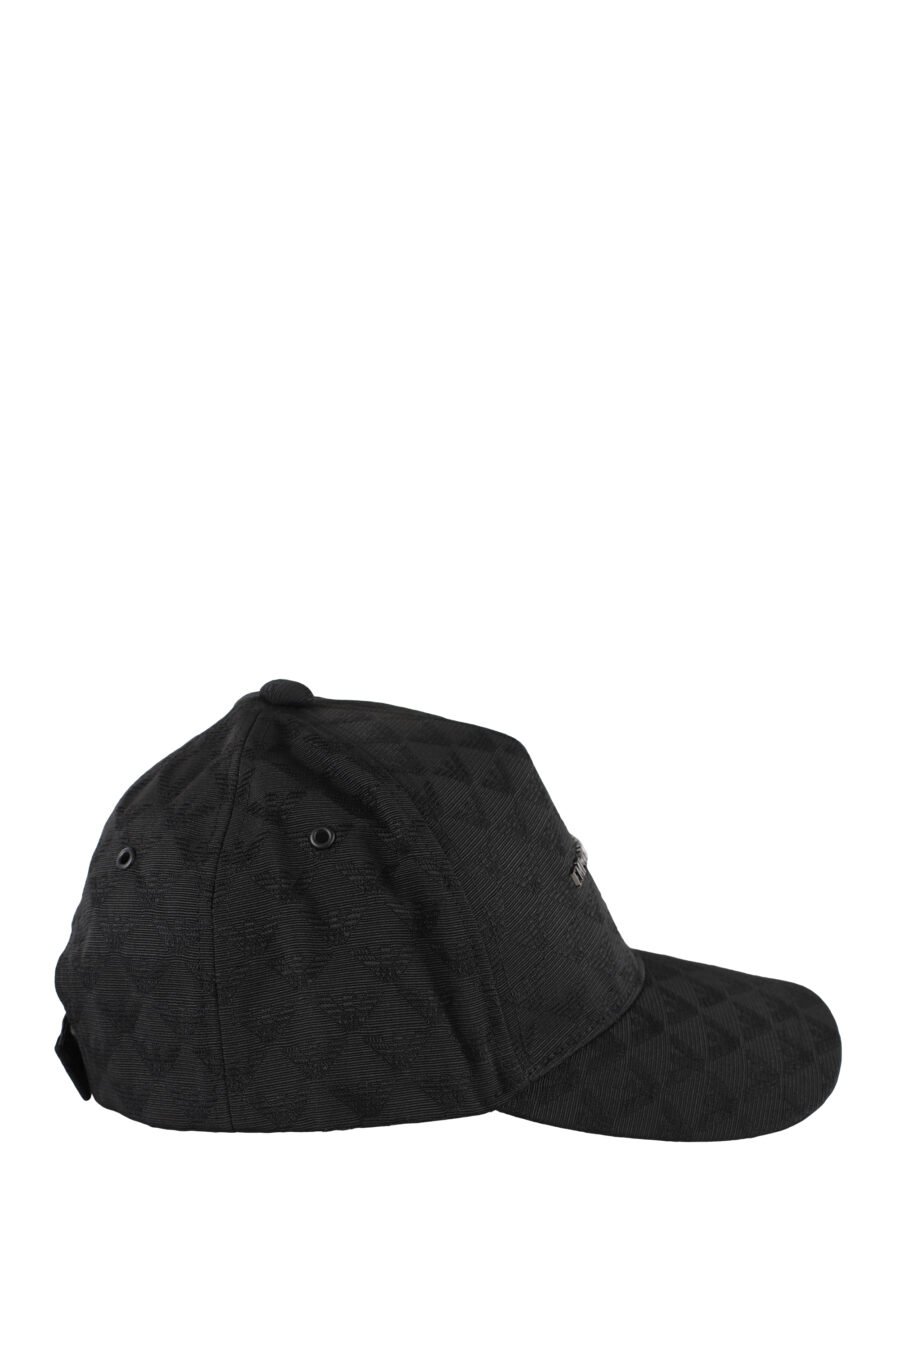 Gorra negra de tejido monograma y logo "lettering" plateado - IMG 5158